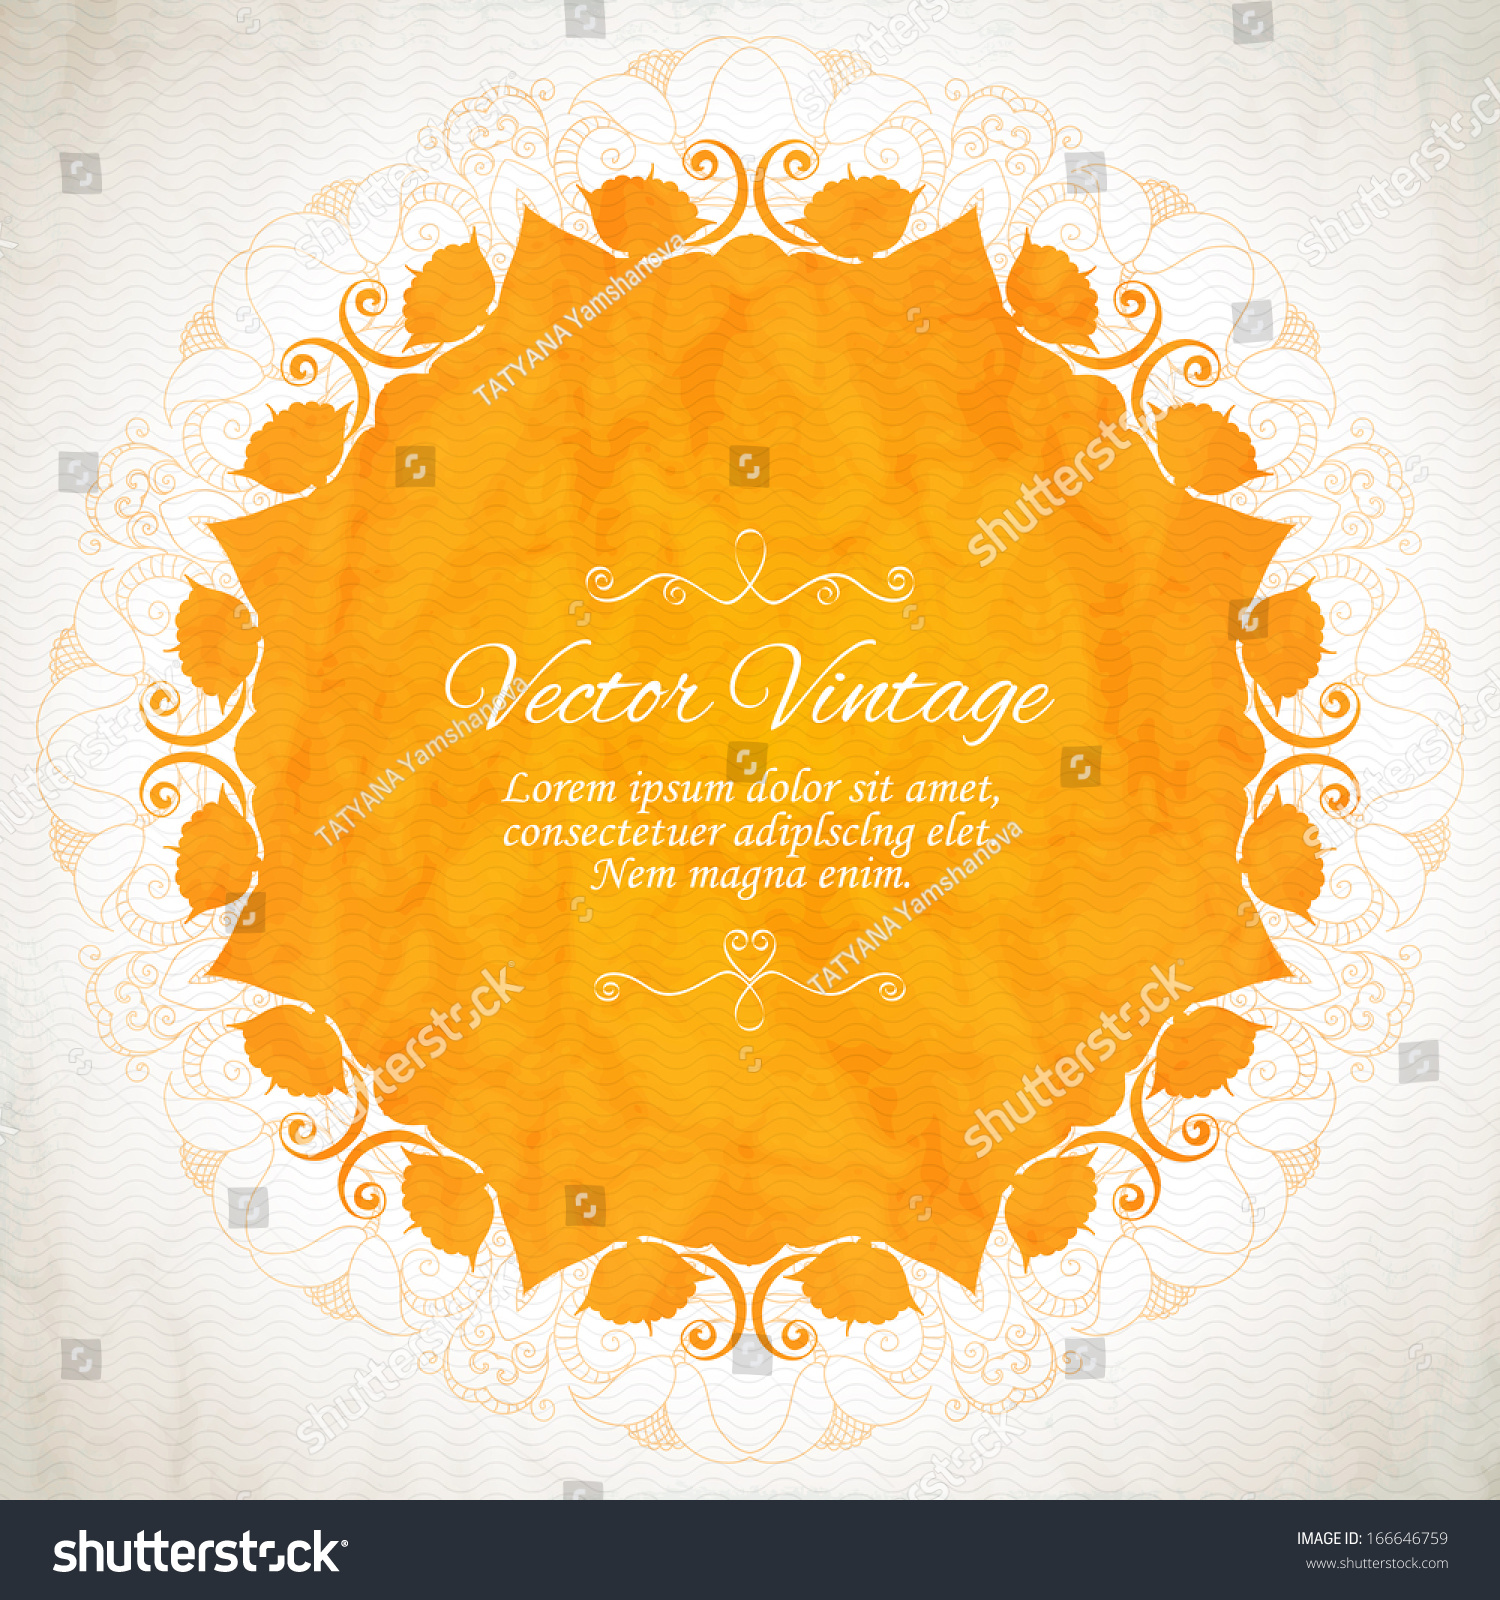 Hindu wedding greeting cards